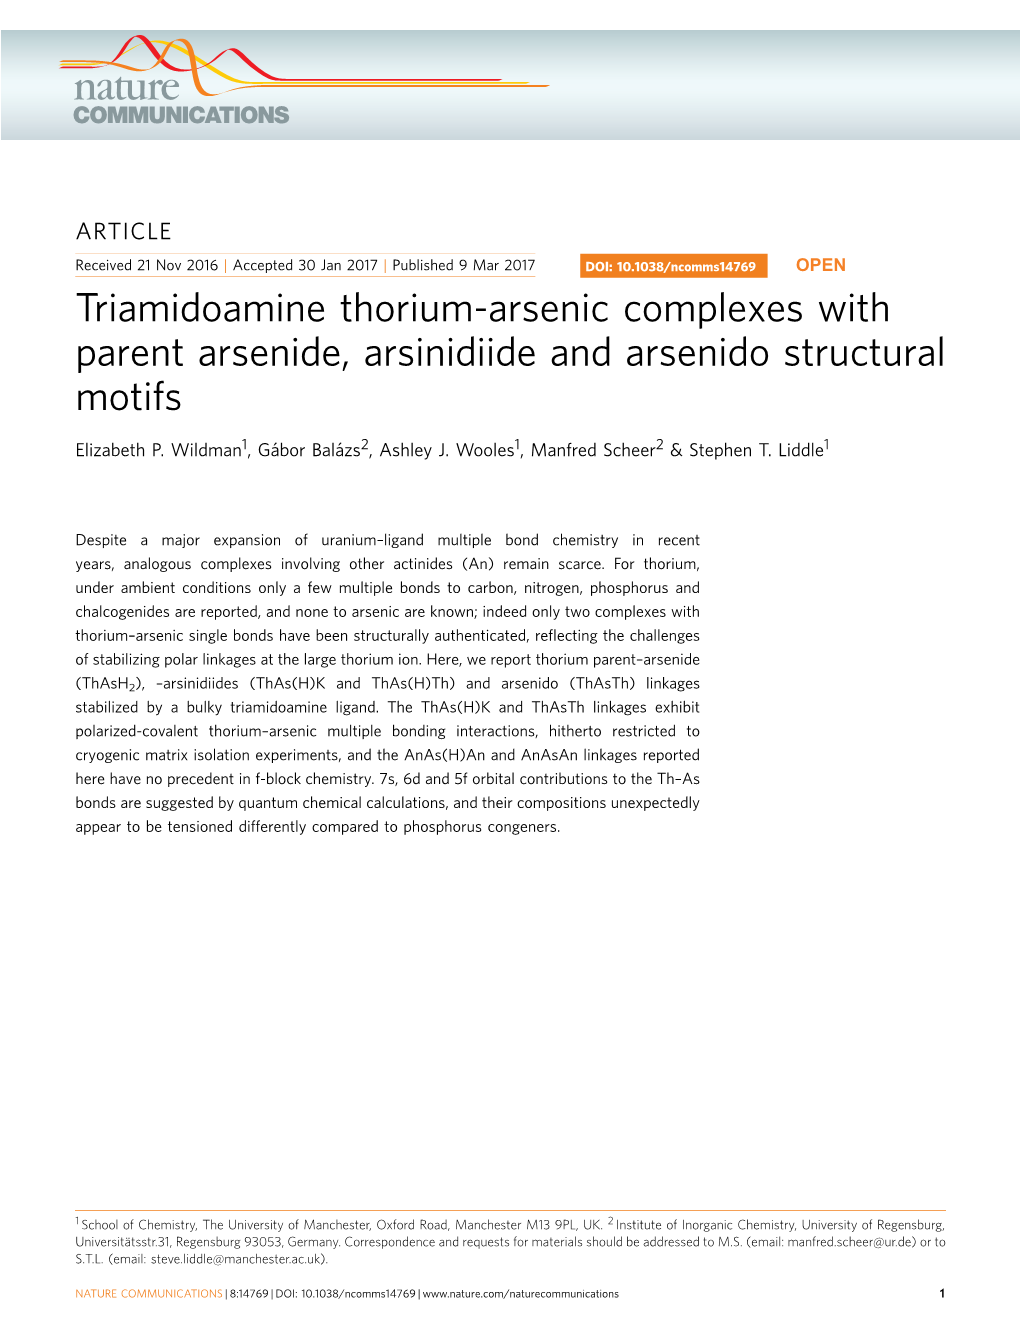 Triamidoamine Thorium-Arsenic Complexes with Parent Arsenide, Arsinidiide and Arsenido Structural Motifs